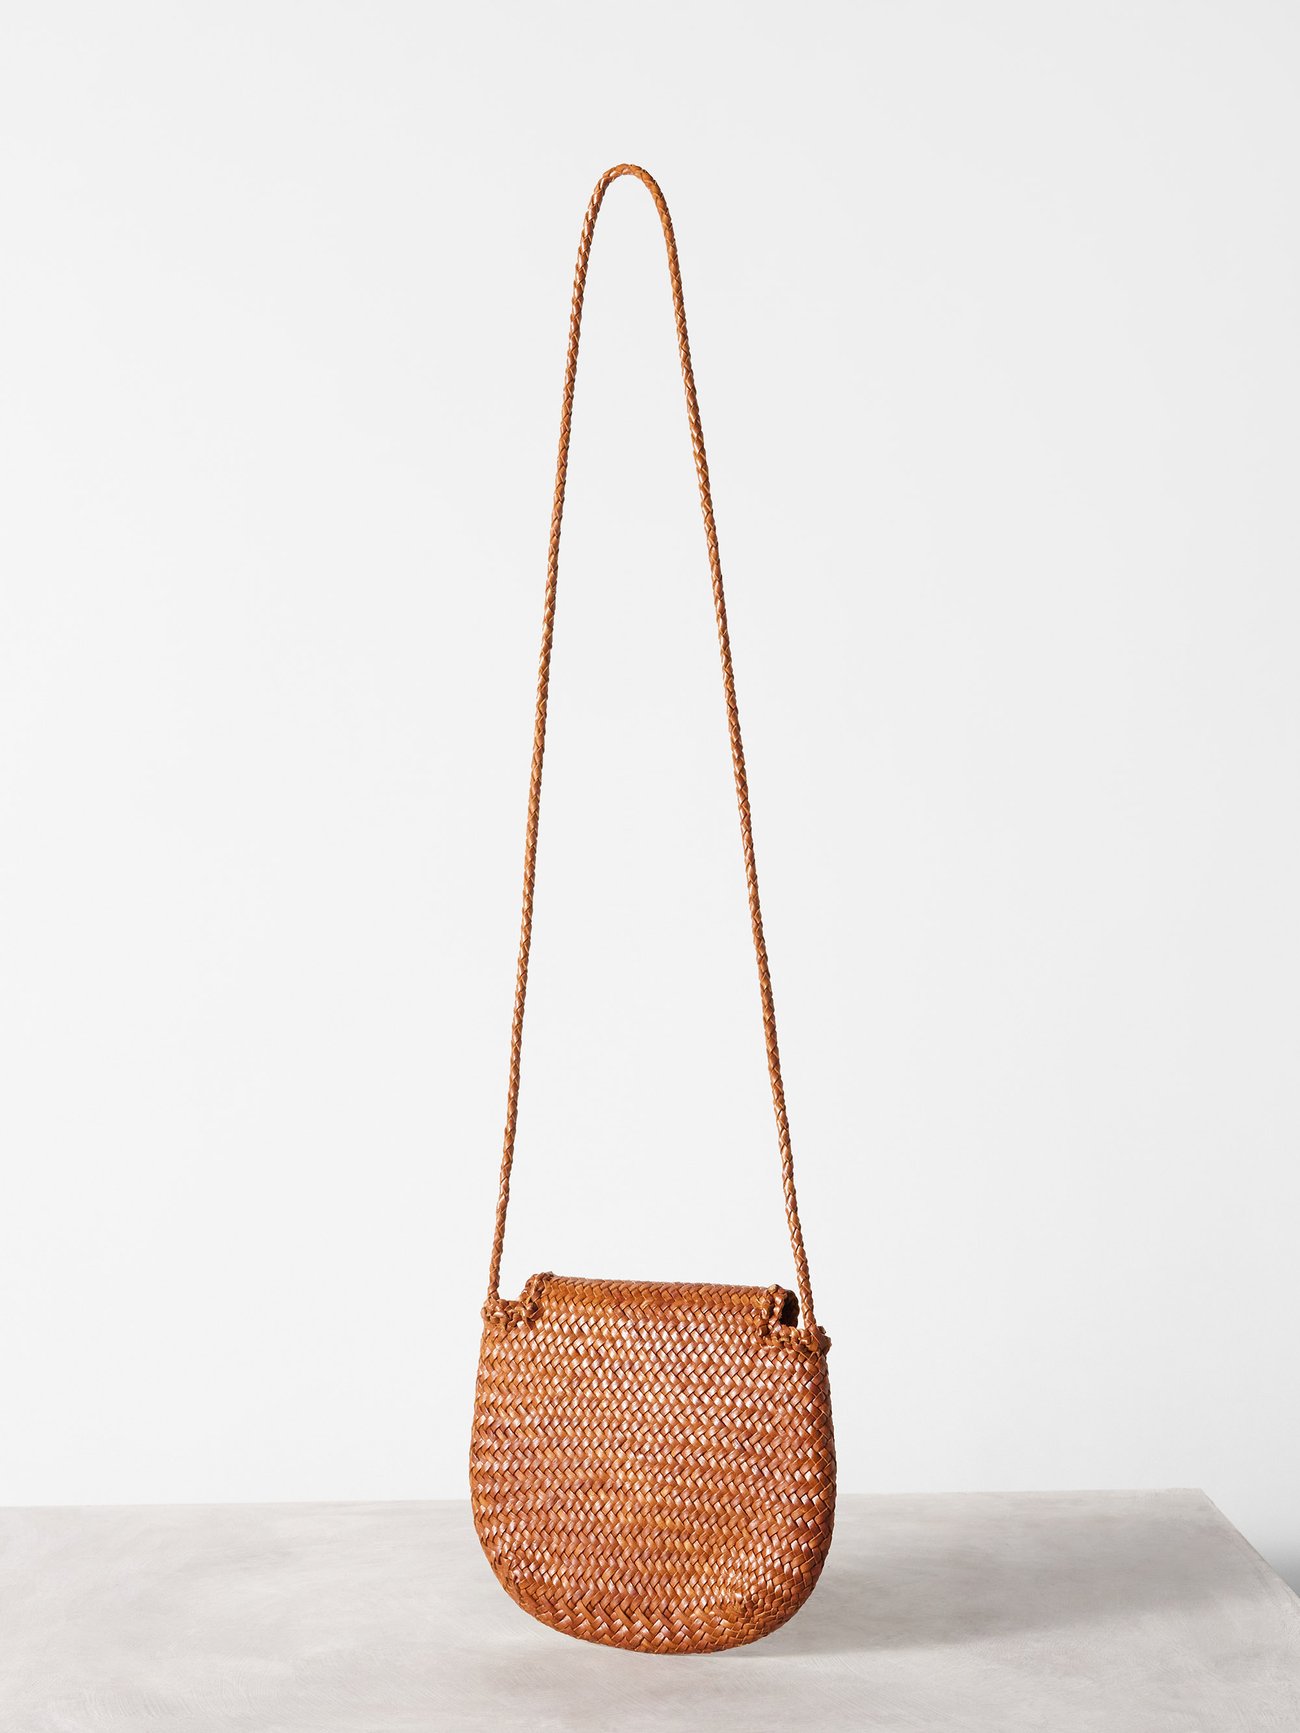 Dragon Diffusion - Mini City Bag Tan Woven Leather Bag